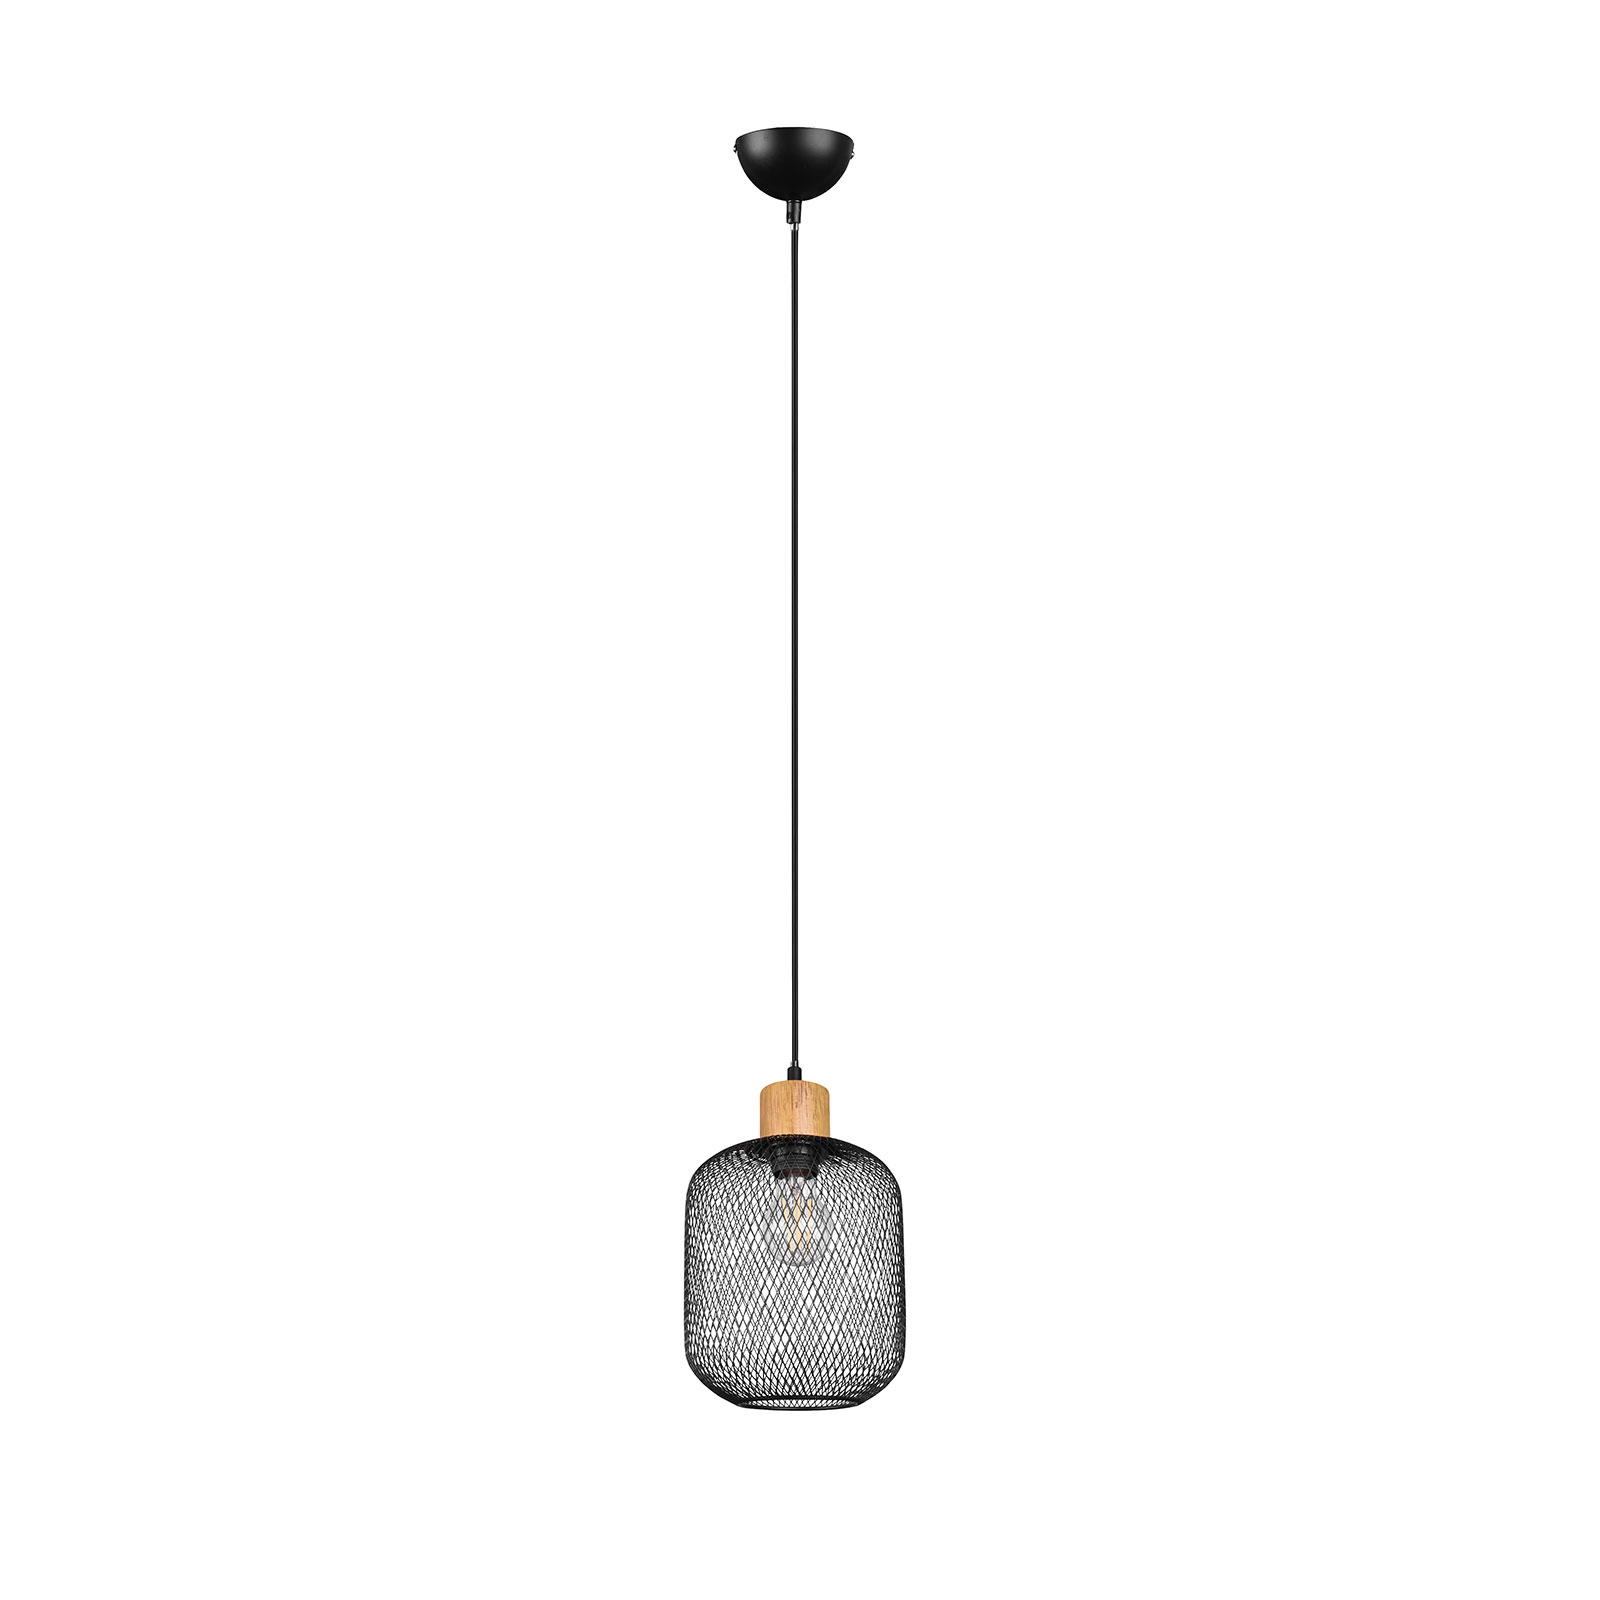 Calimero hængelampe, burlook, 1 lyskilde, Ø 18 cm